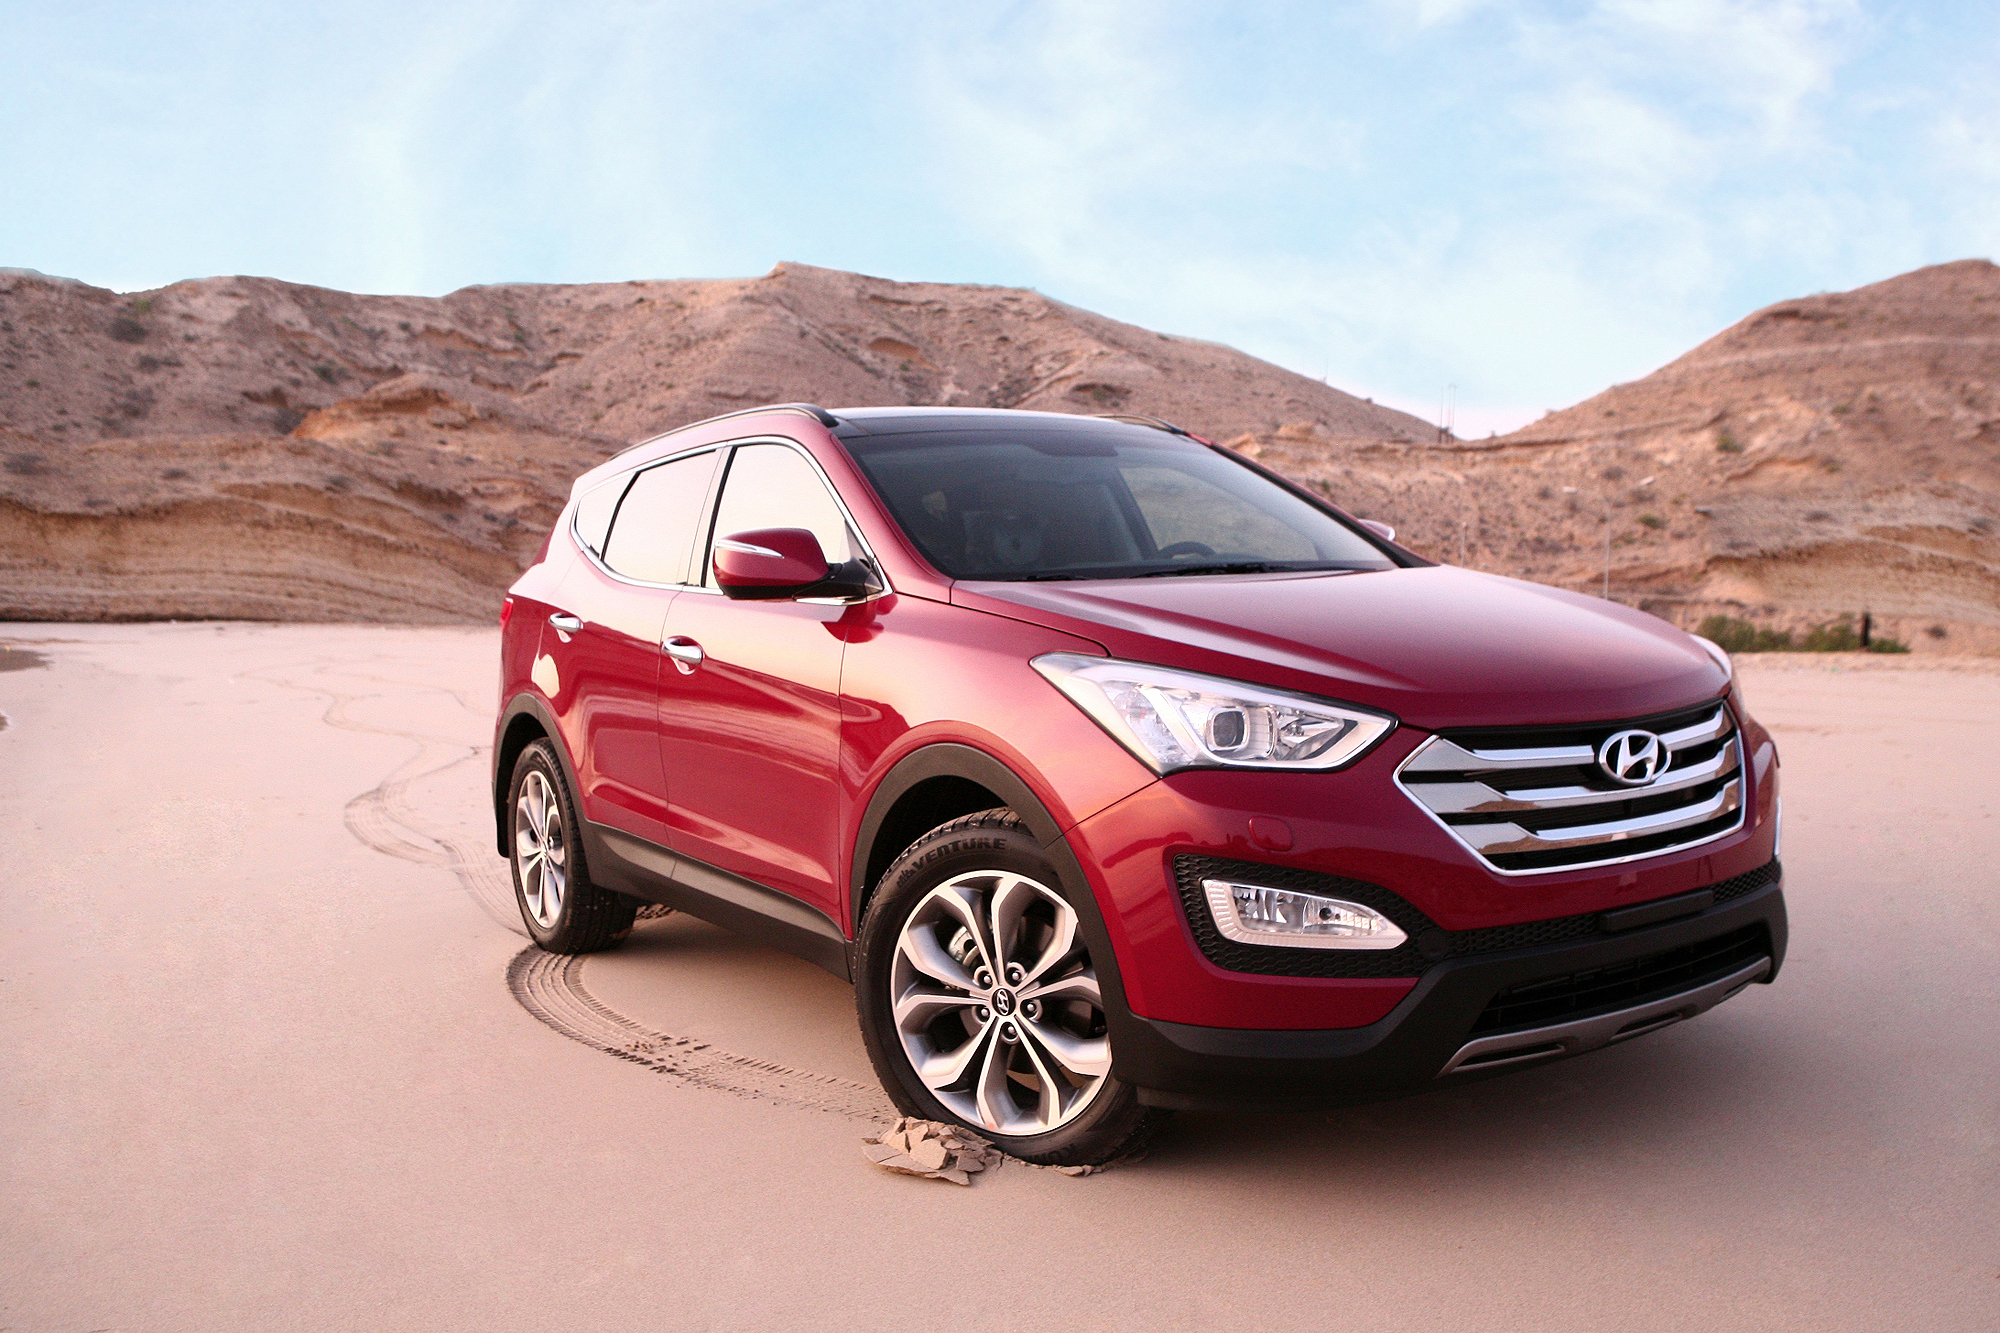 2013 Hyundai Santa Fe now on sale - Motoring Middle East: Car news